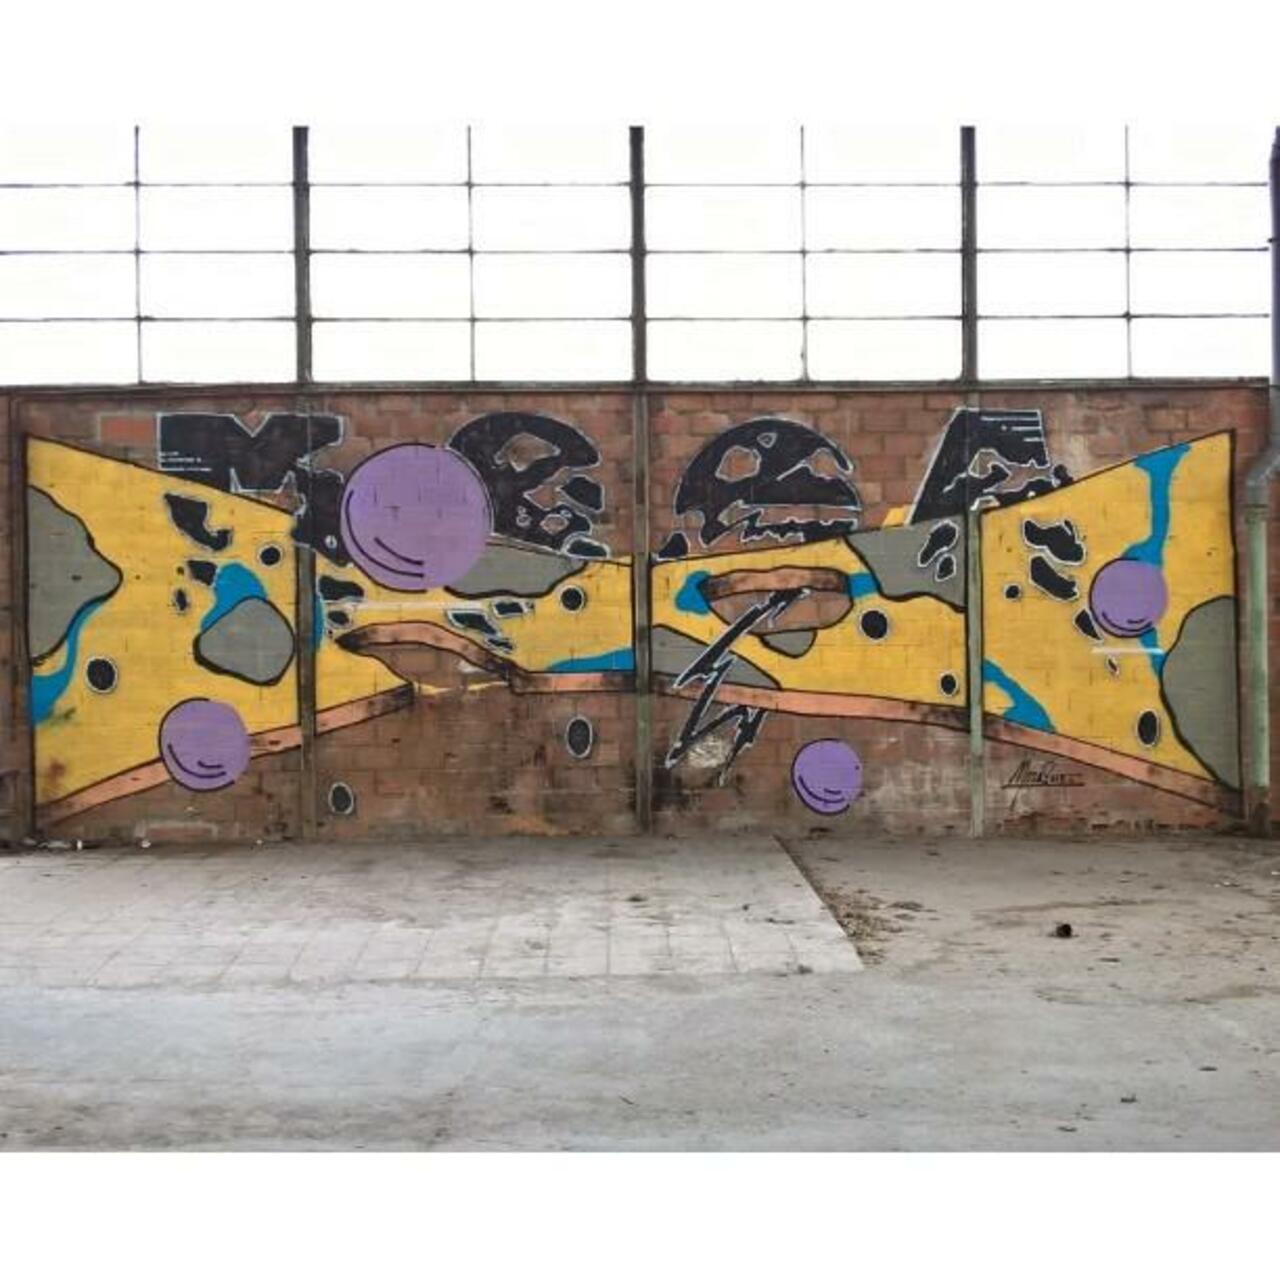 MOSA
#masterpiece #PALcrew #PeaceAndLoveCrew #streetart #graffiti #graff #art #fatcap #bombing #sprayart #spraycana… http://t.co/cmgg4G9dUn